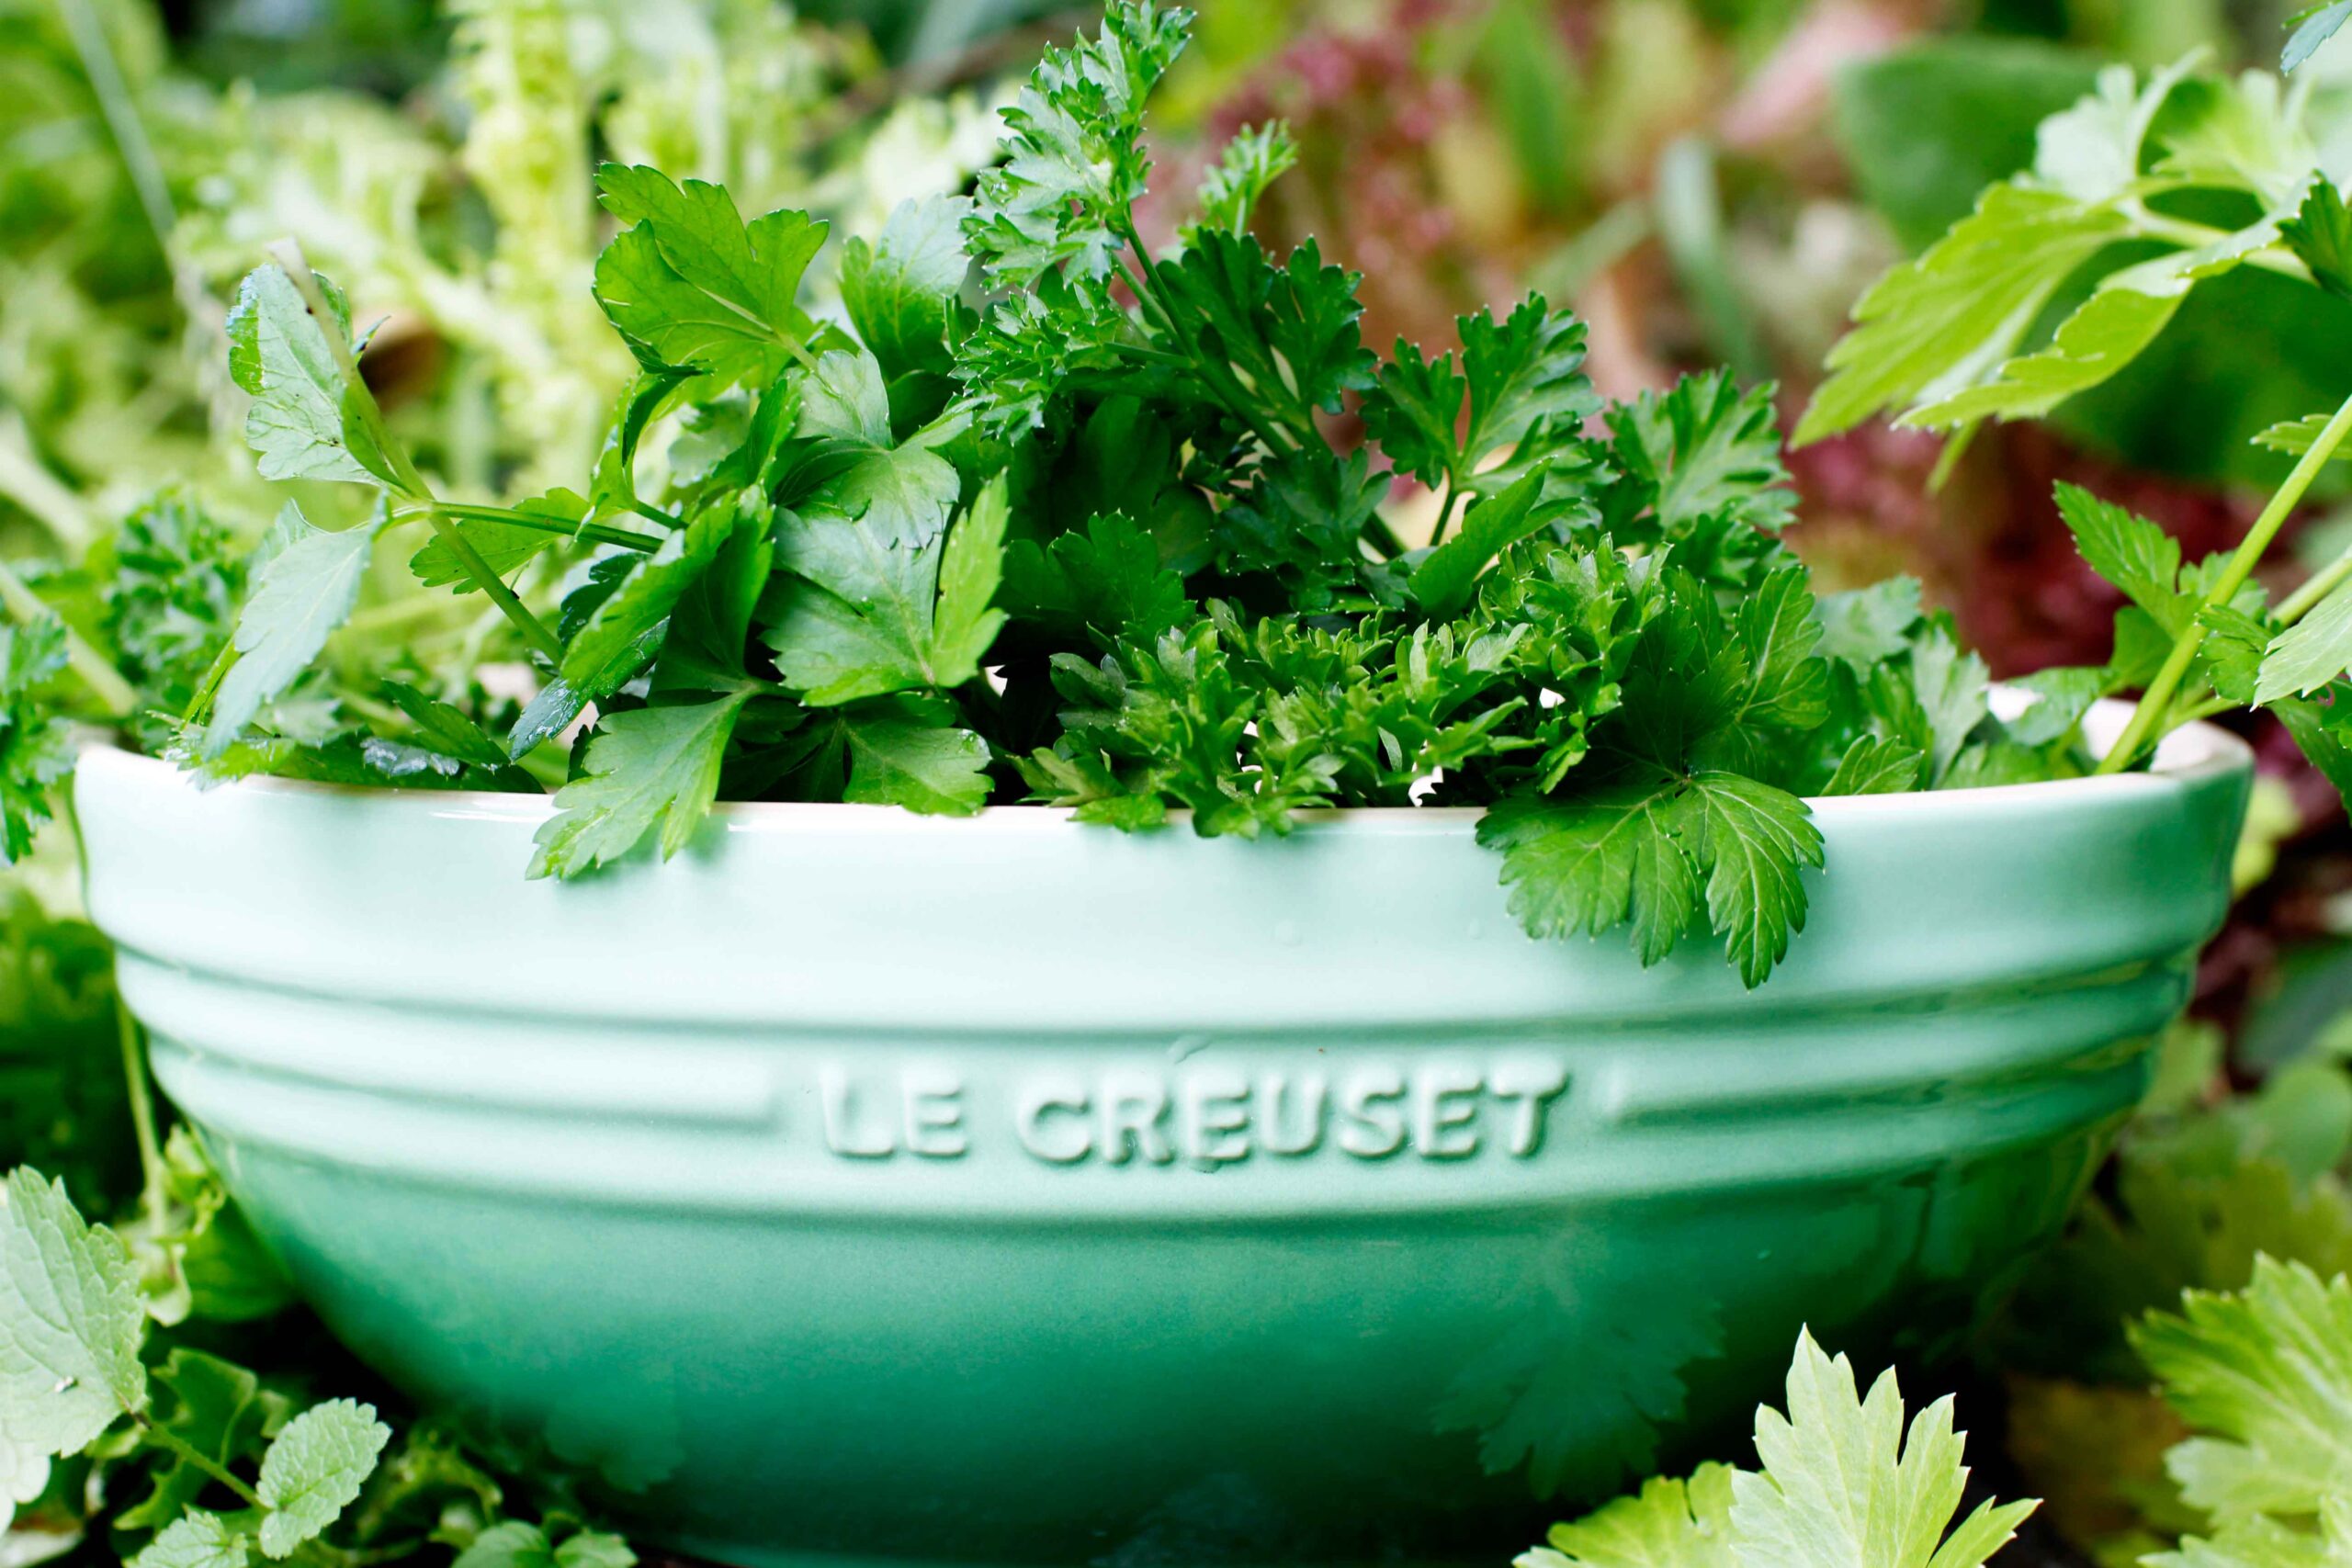 ALT="herbs, parsley, green bowl,Le creuset, 641 kb"